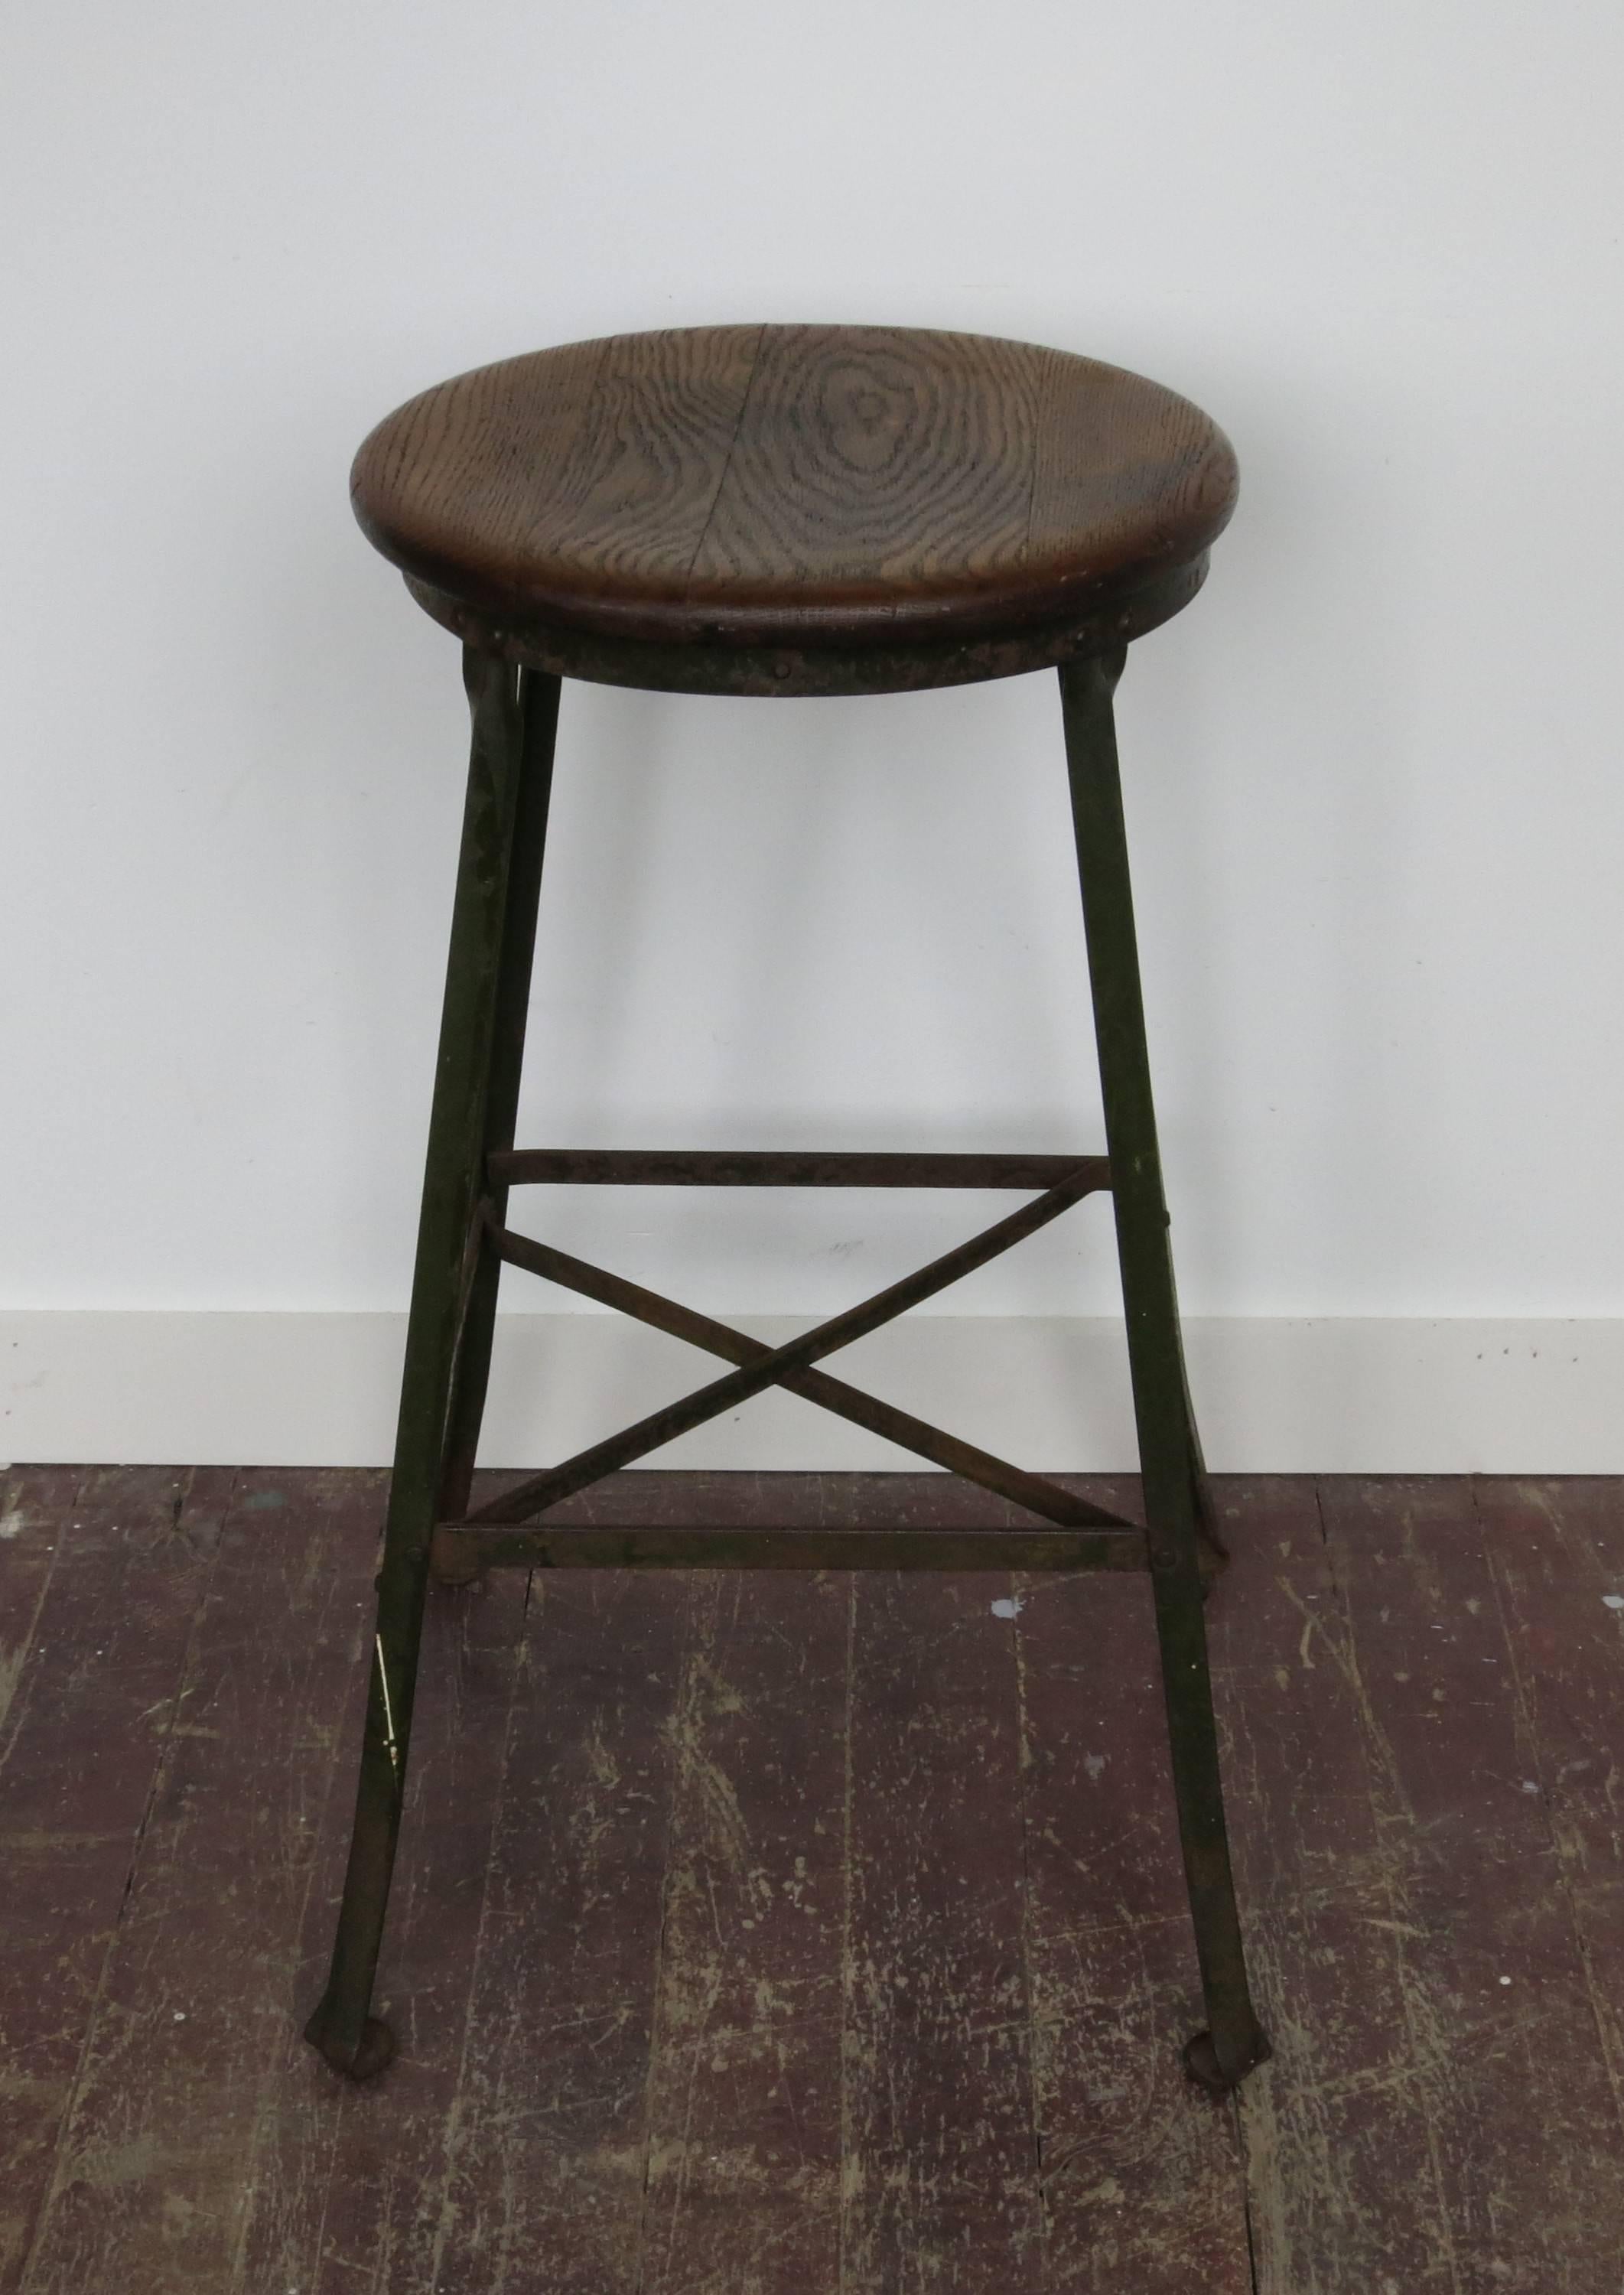 vintage industrial stools